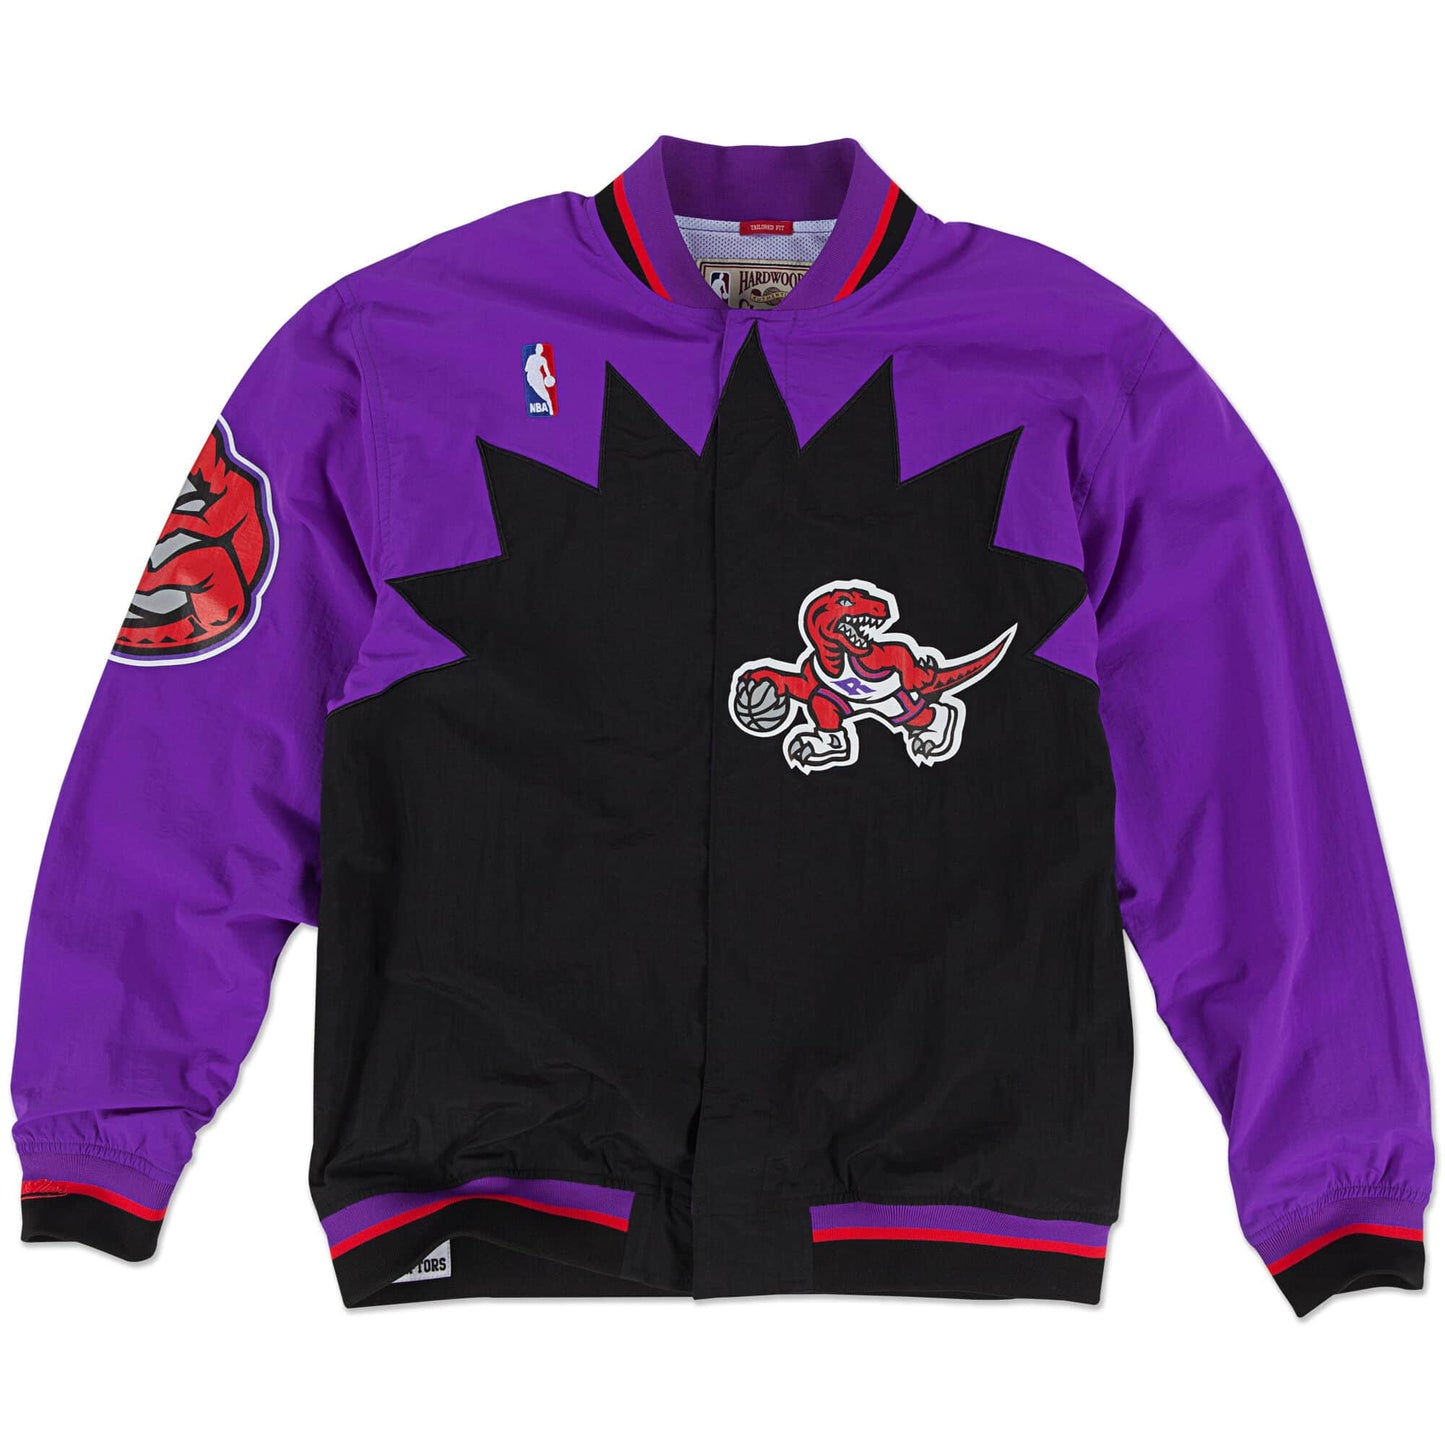 Authentic Warm Up Jacket Toronto Raptors 1995-96